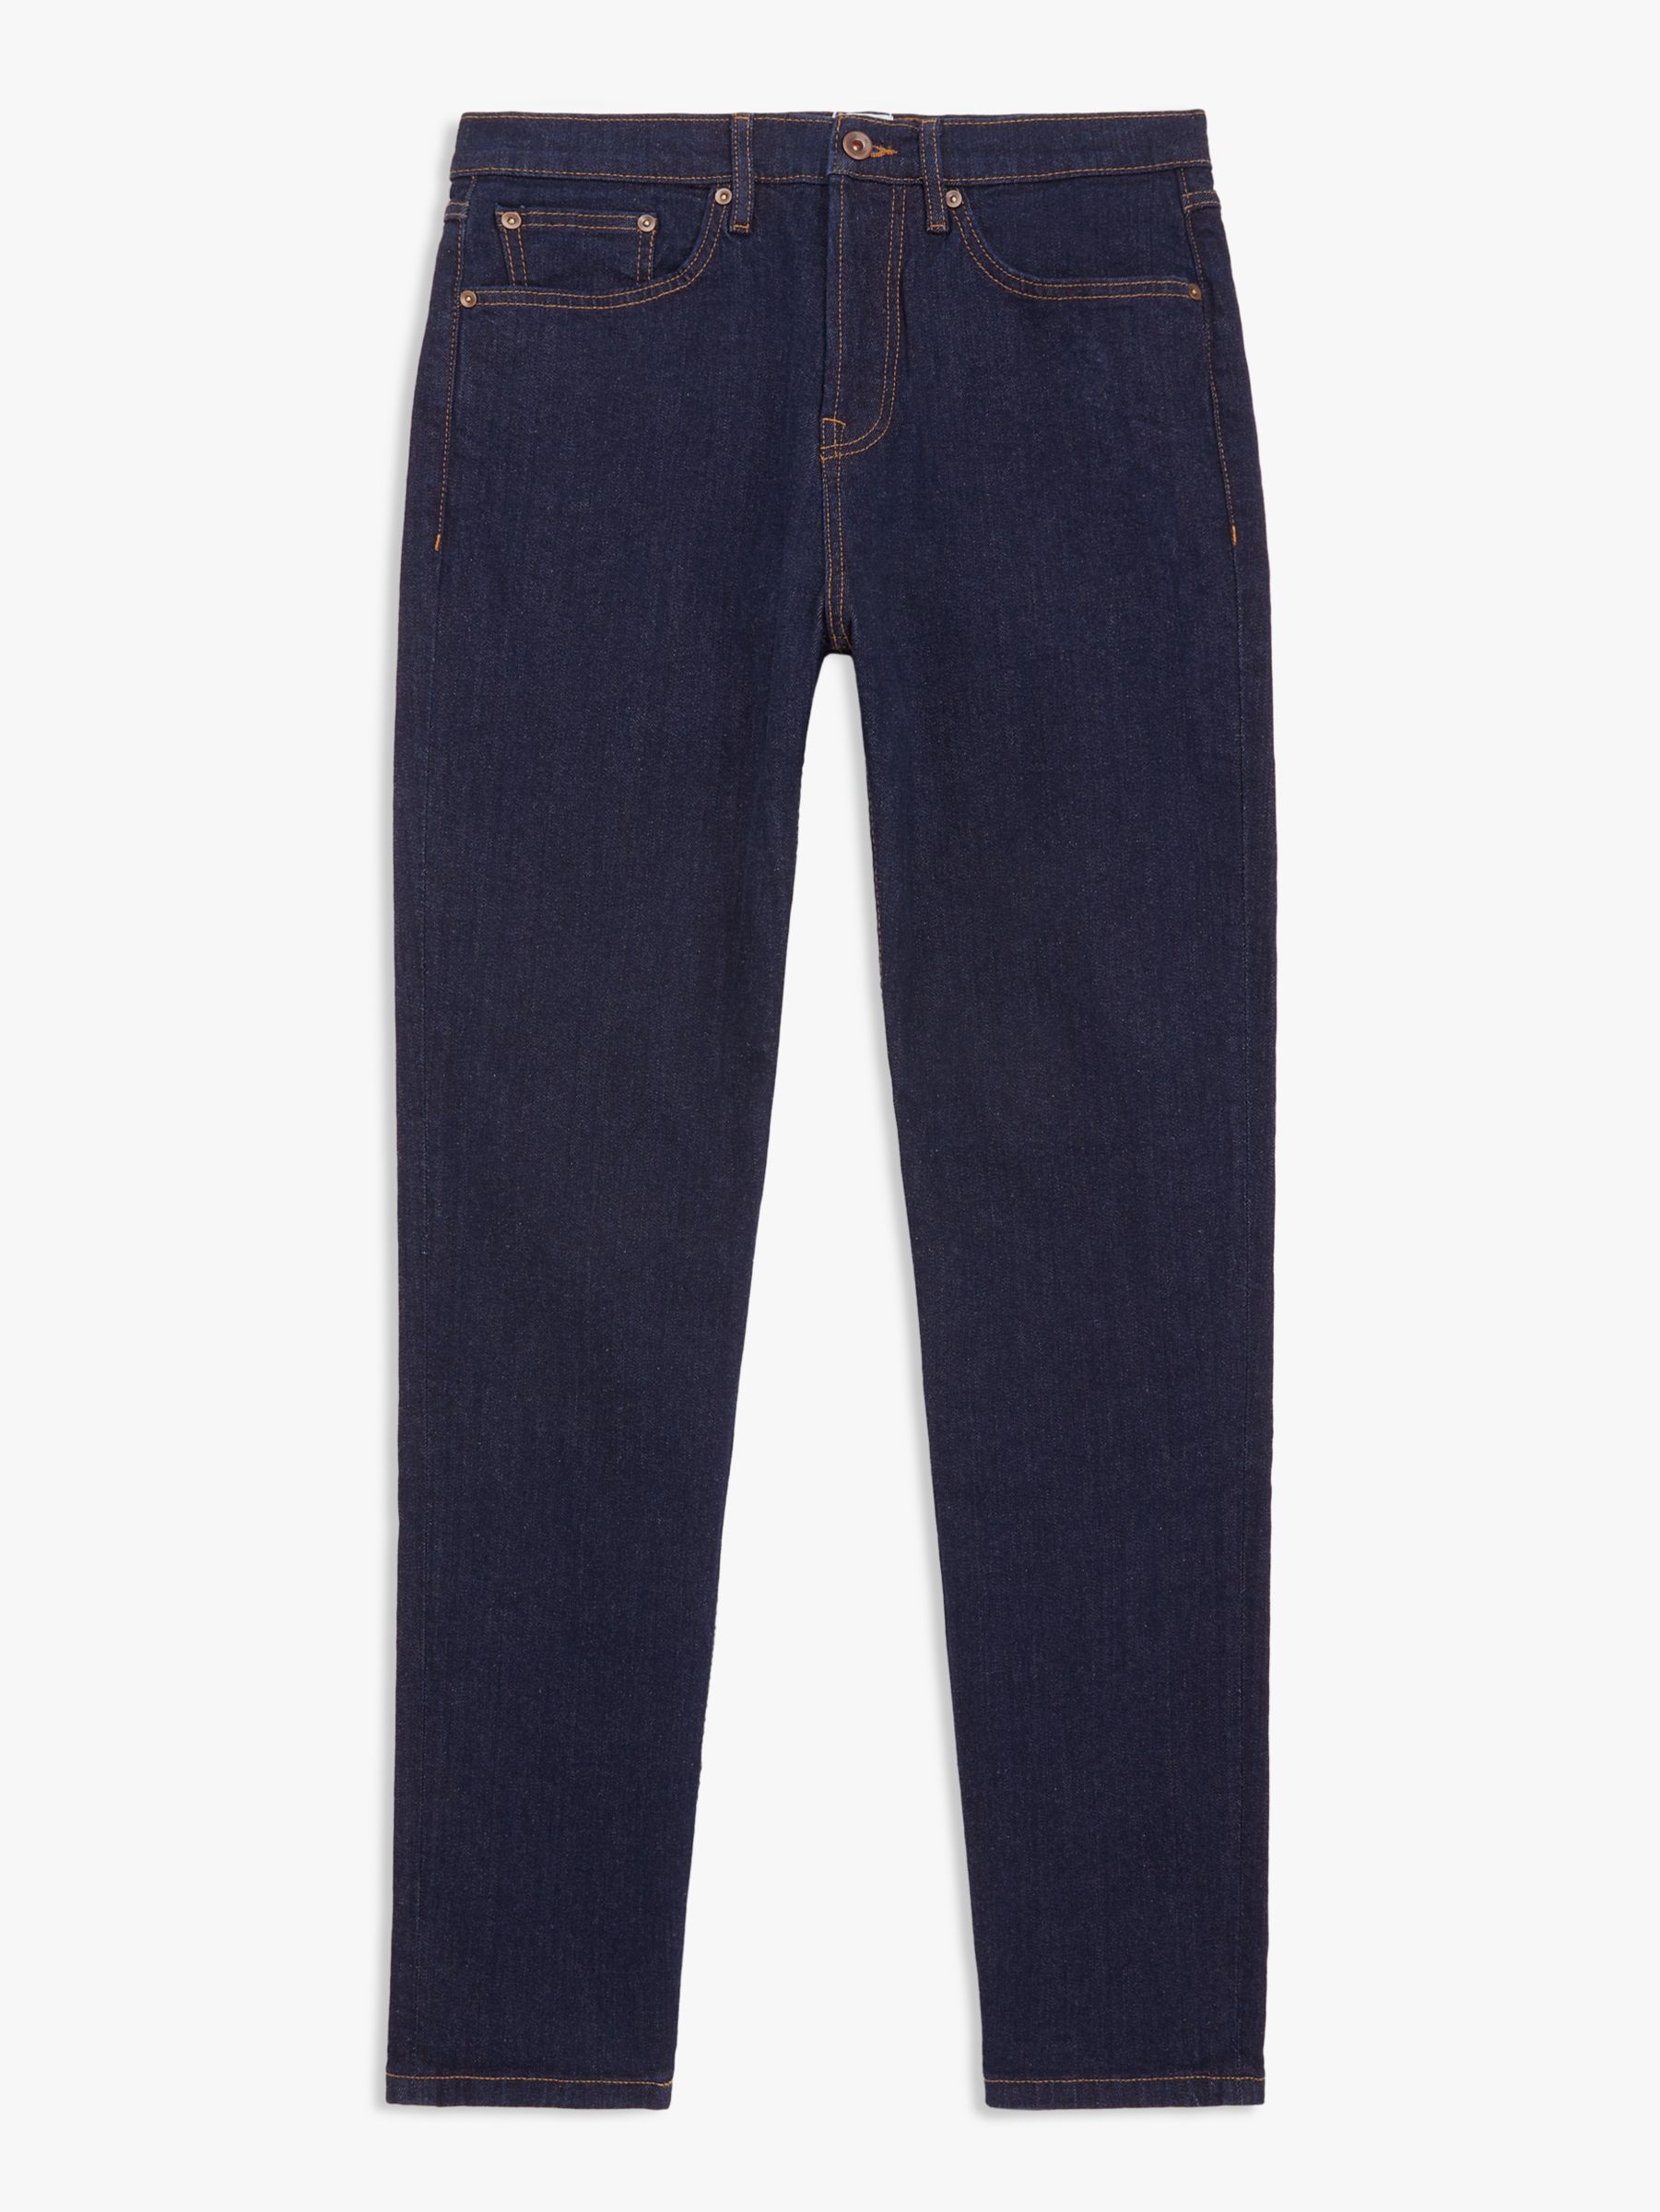 John Lewis Straight Fit Denim Jeans, Blue at John Lewis & Partners